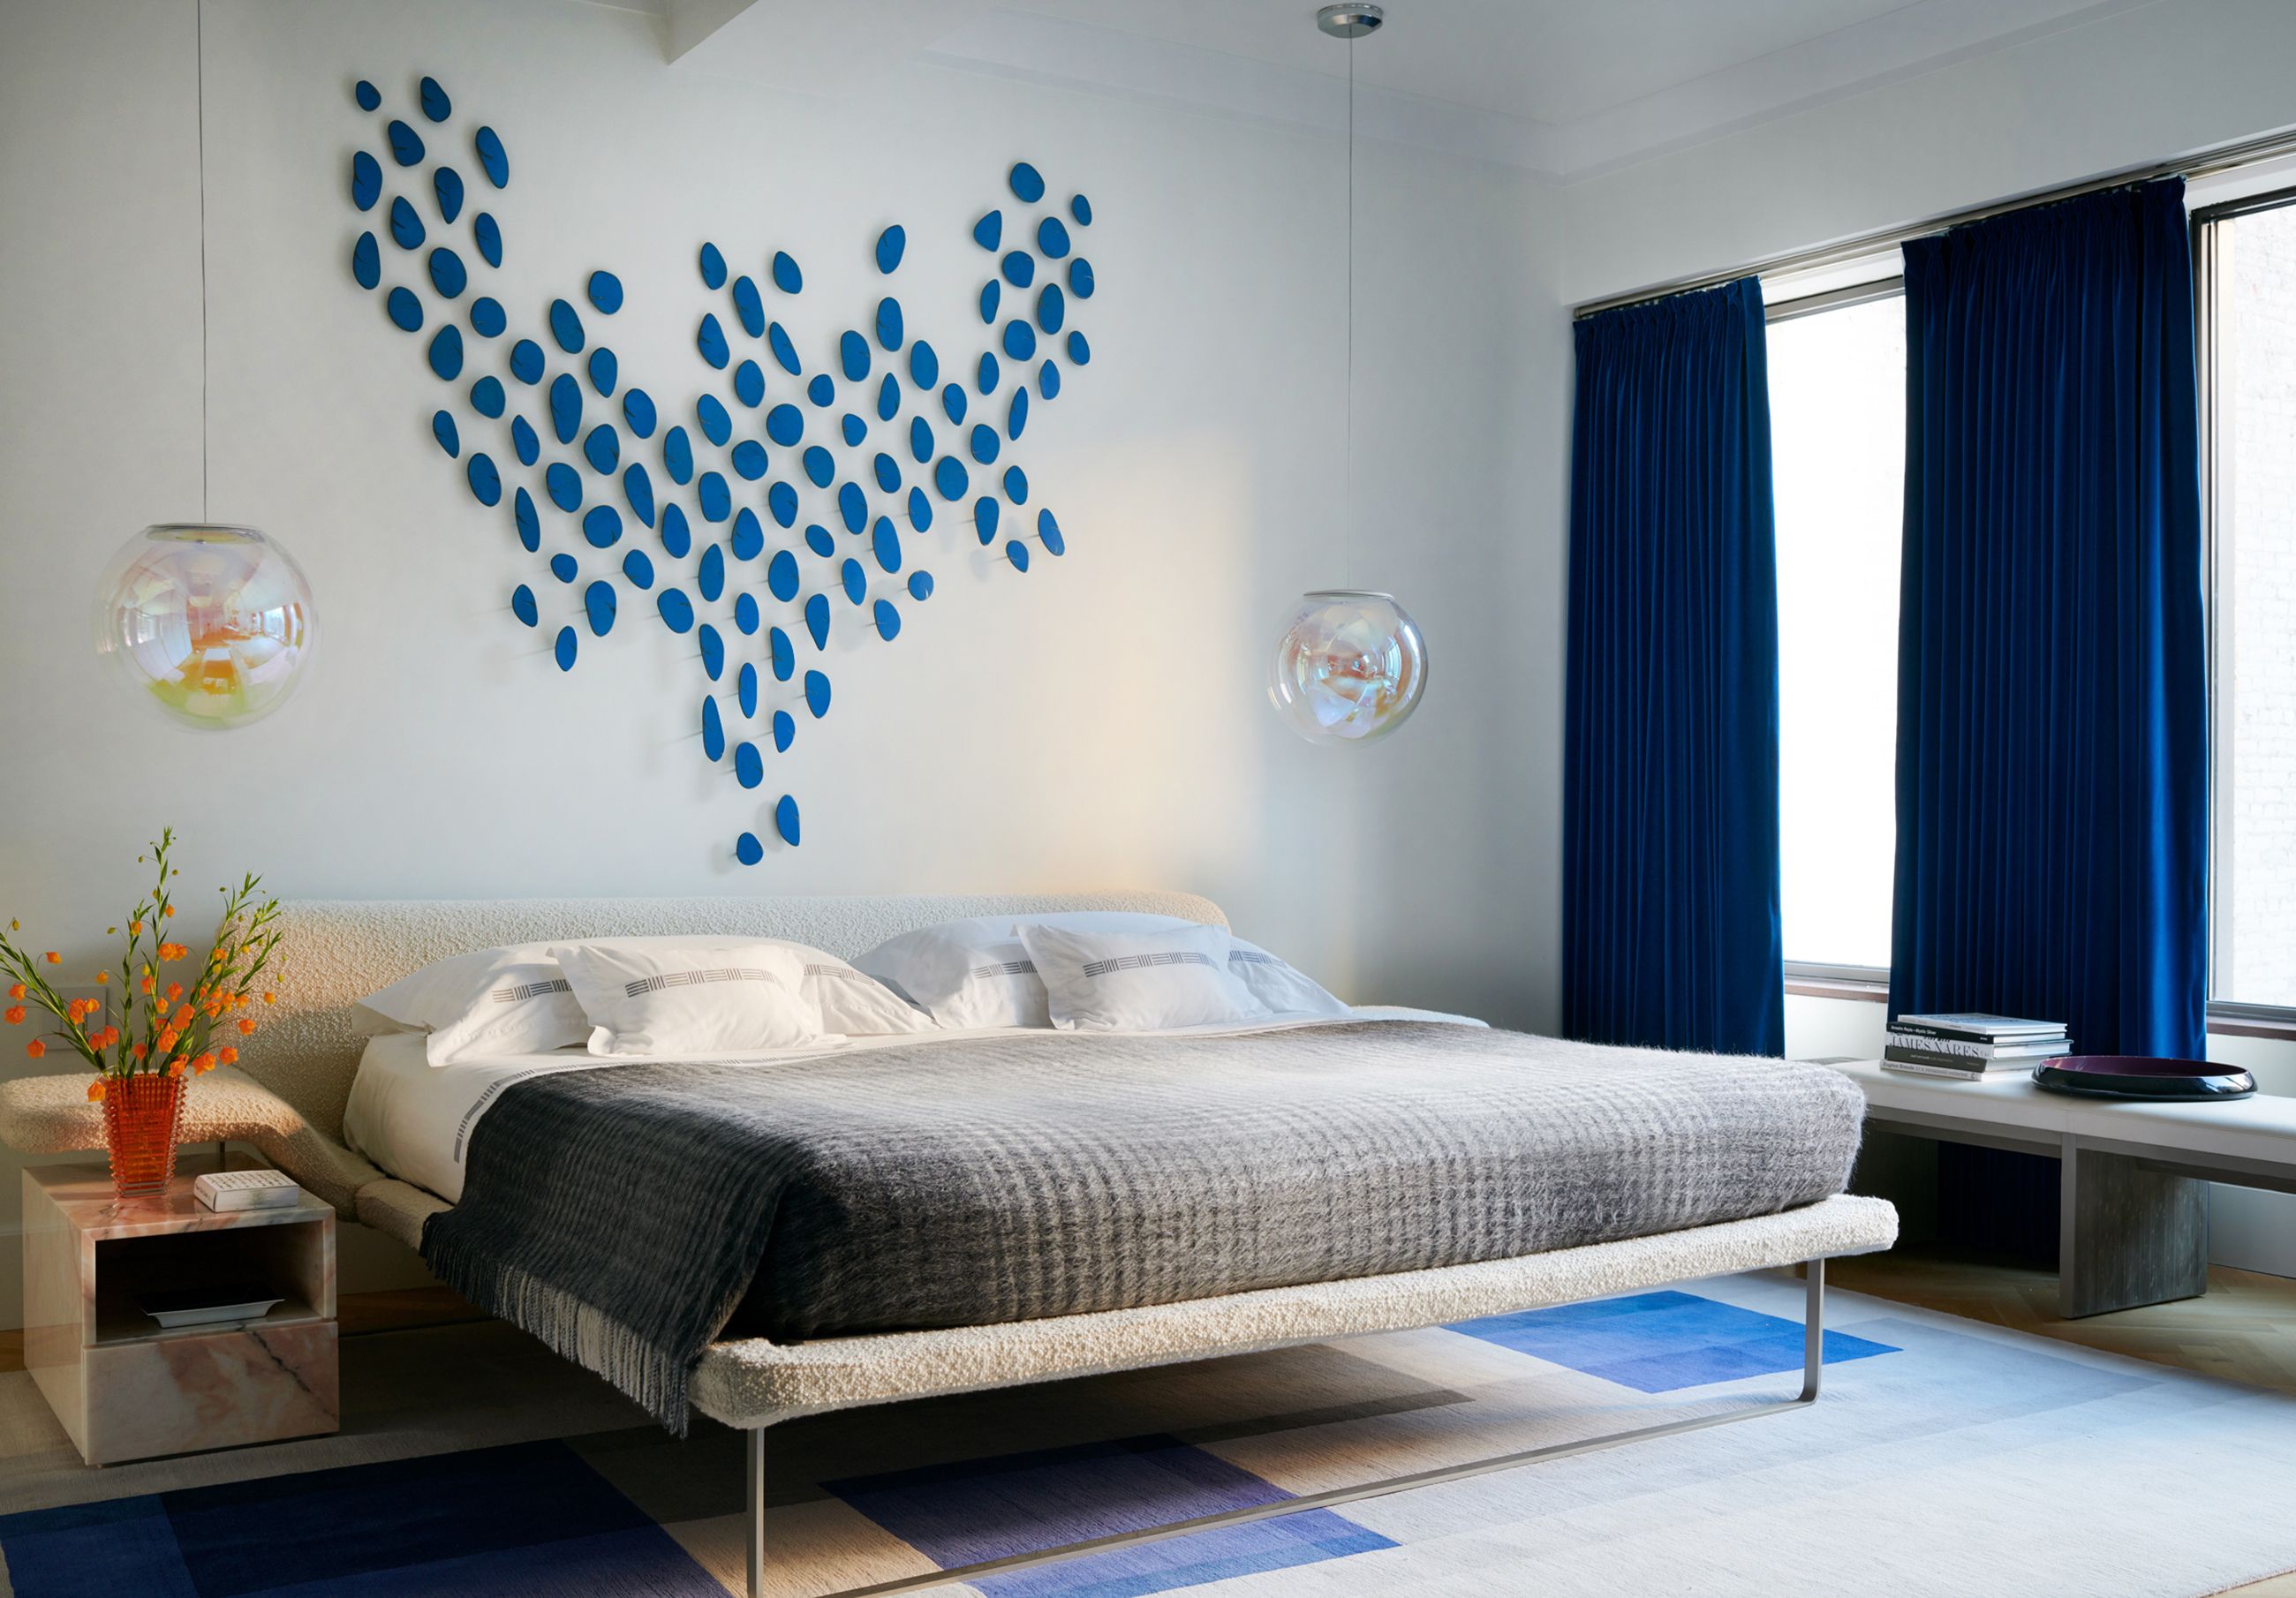 20 Inspiring Modern Bedroom Ideas - Best Modern Bedroom Designs